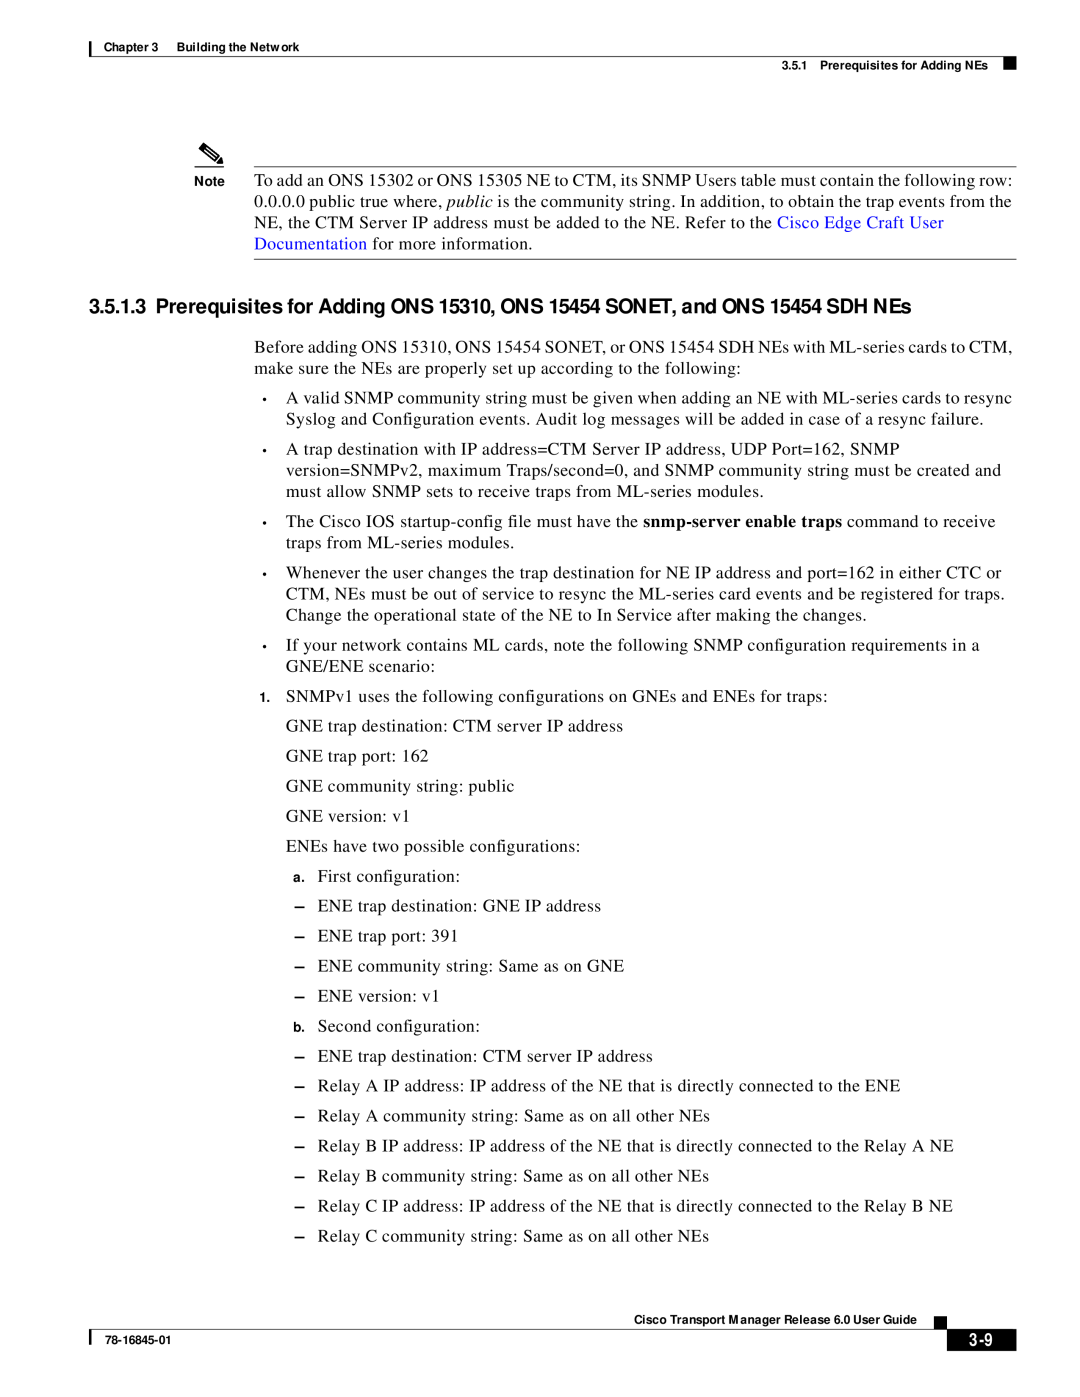 Cisco Systems 78-16845-01 manual GNE trap port GNE community string public GNE version 